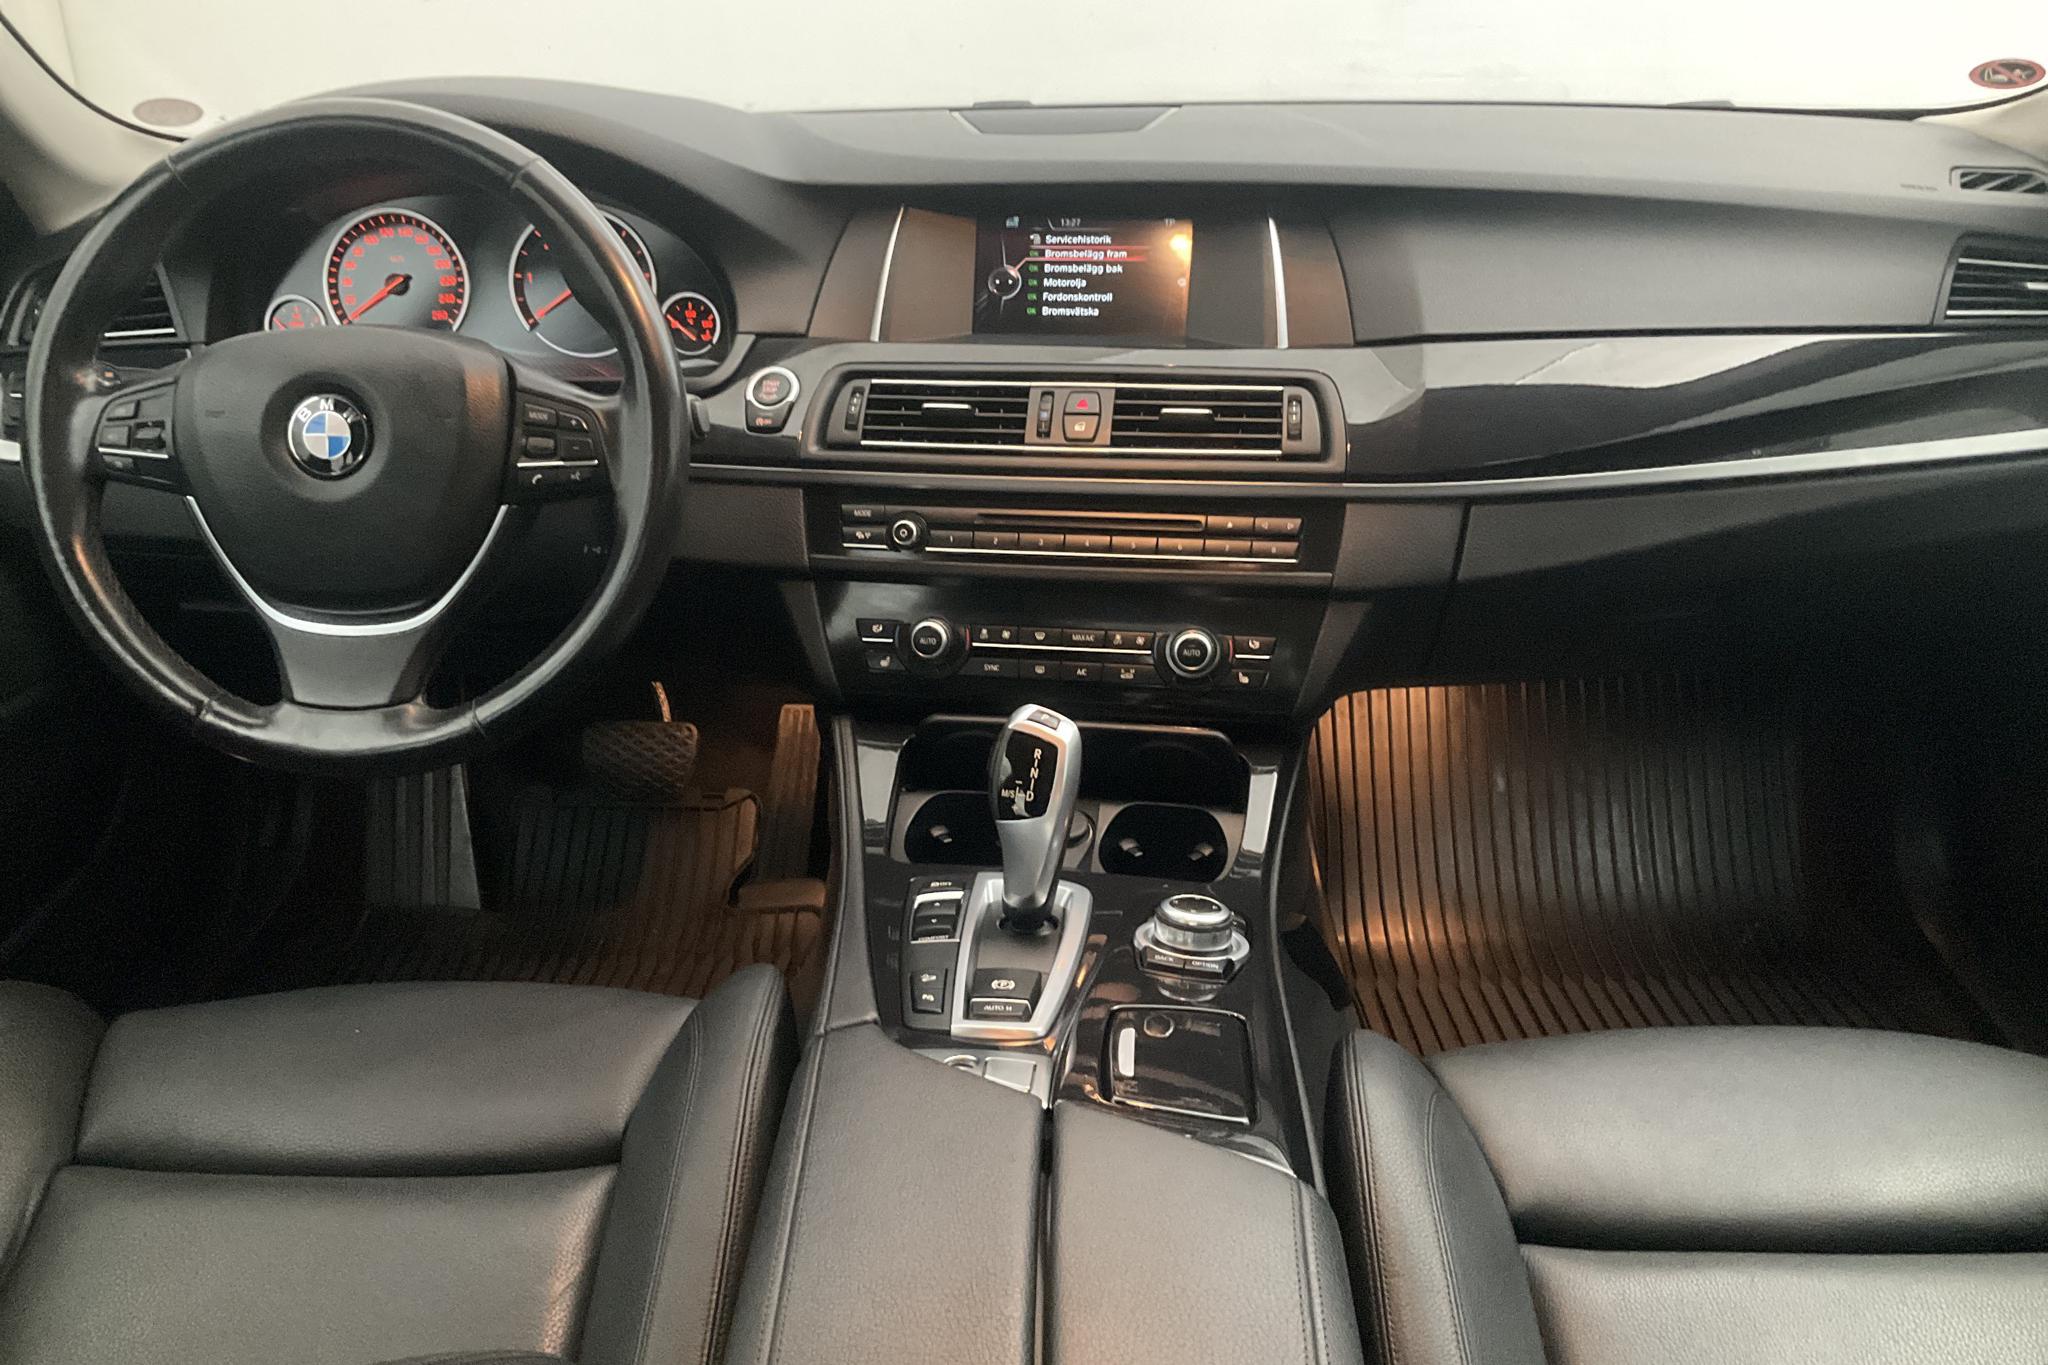 BMW 520d xDrive Sedan, F10 (190hk) - 92 920 km - Automatic - gray - 2016